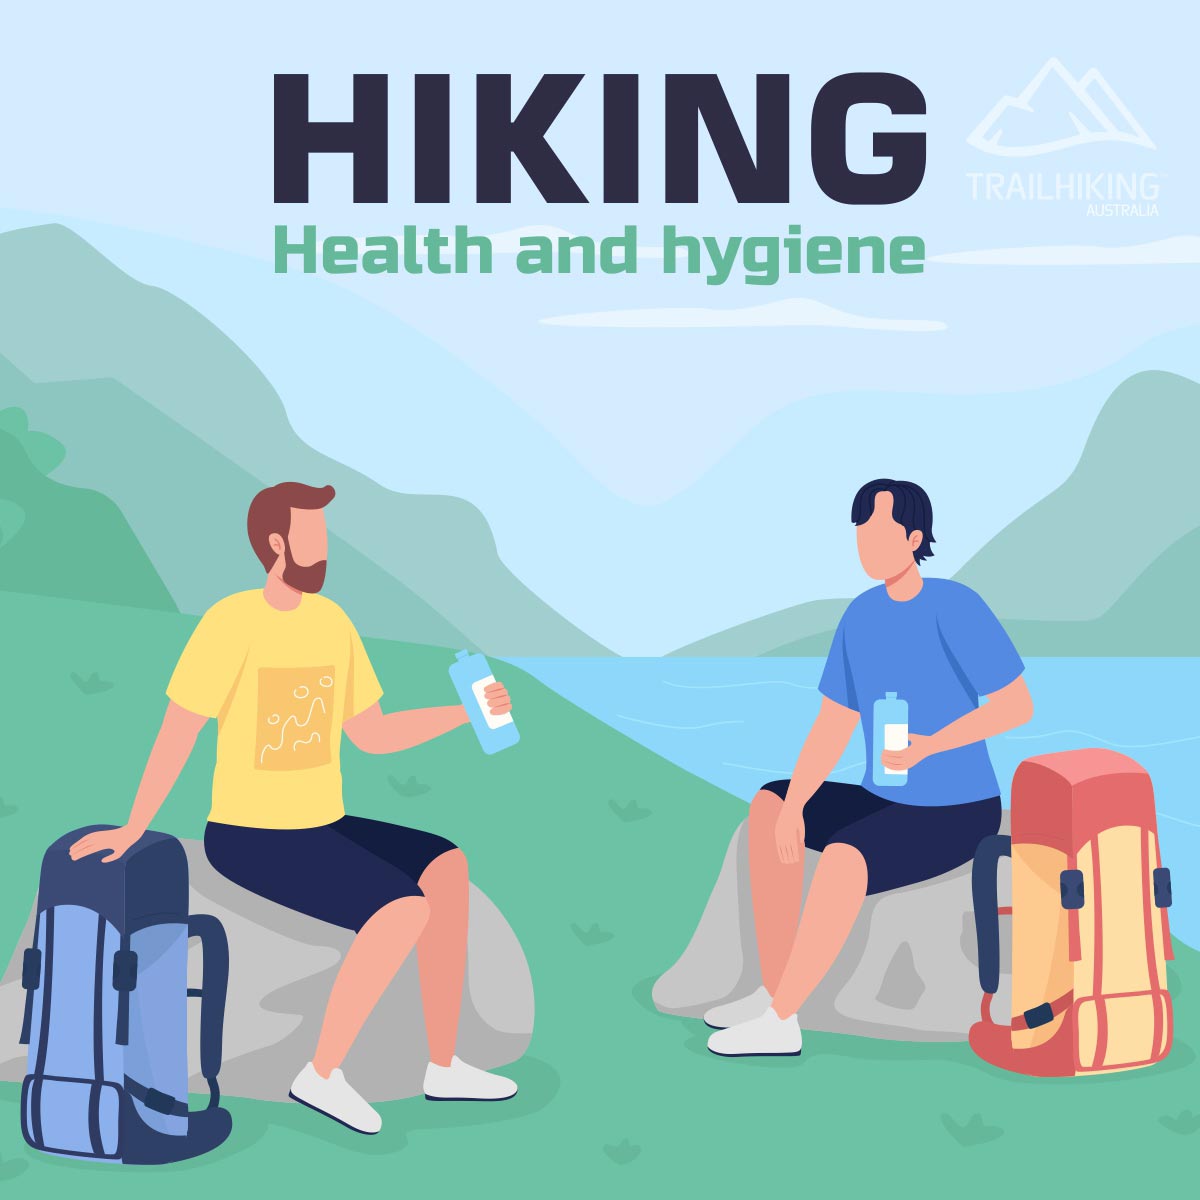 Hiking health and hygiene